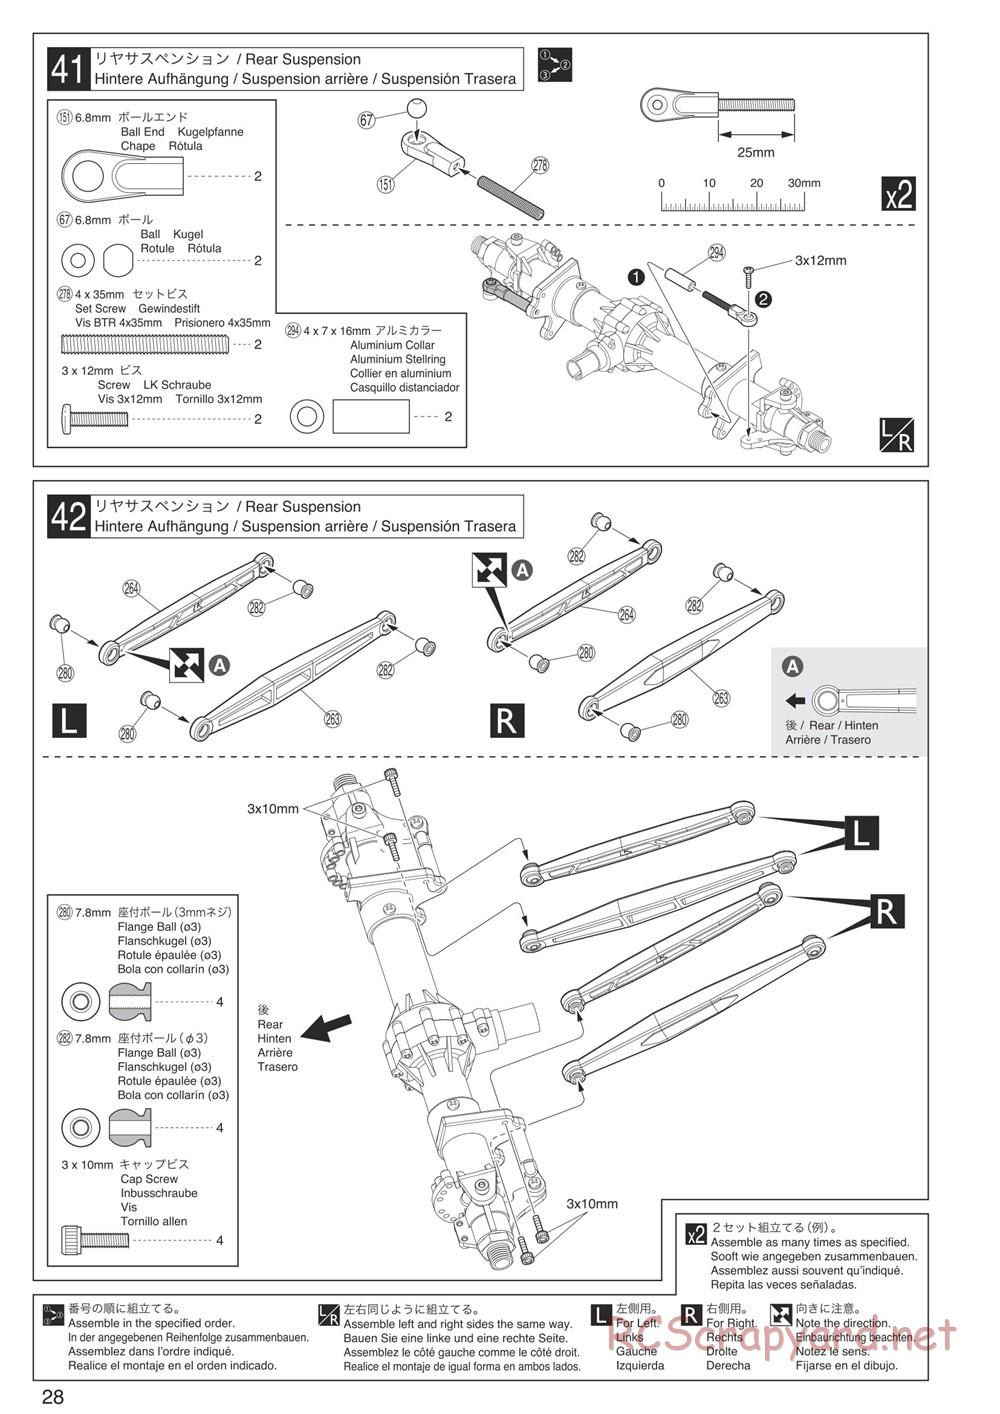 Kyosho - FO-XX 2.0 - Manual - Page 28